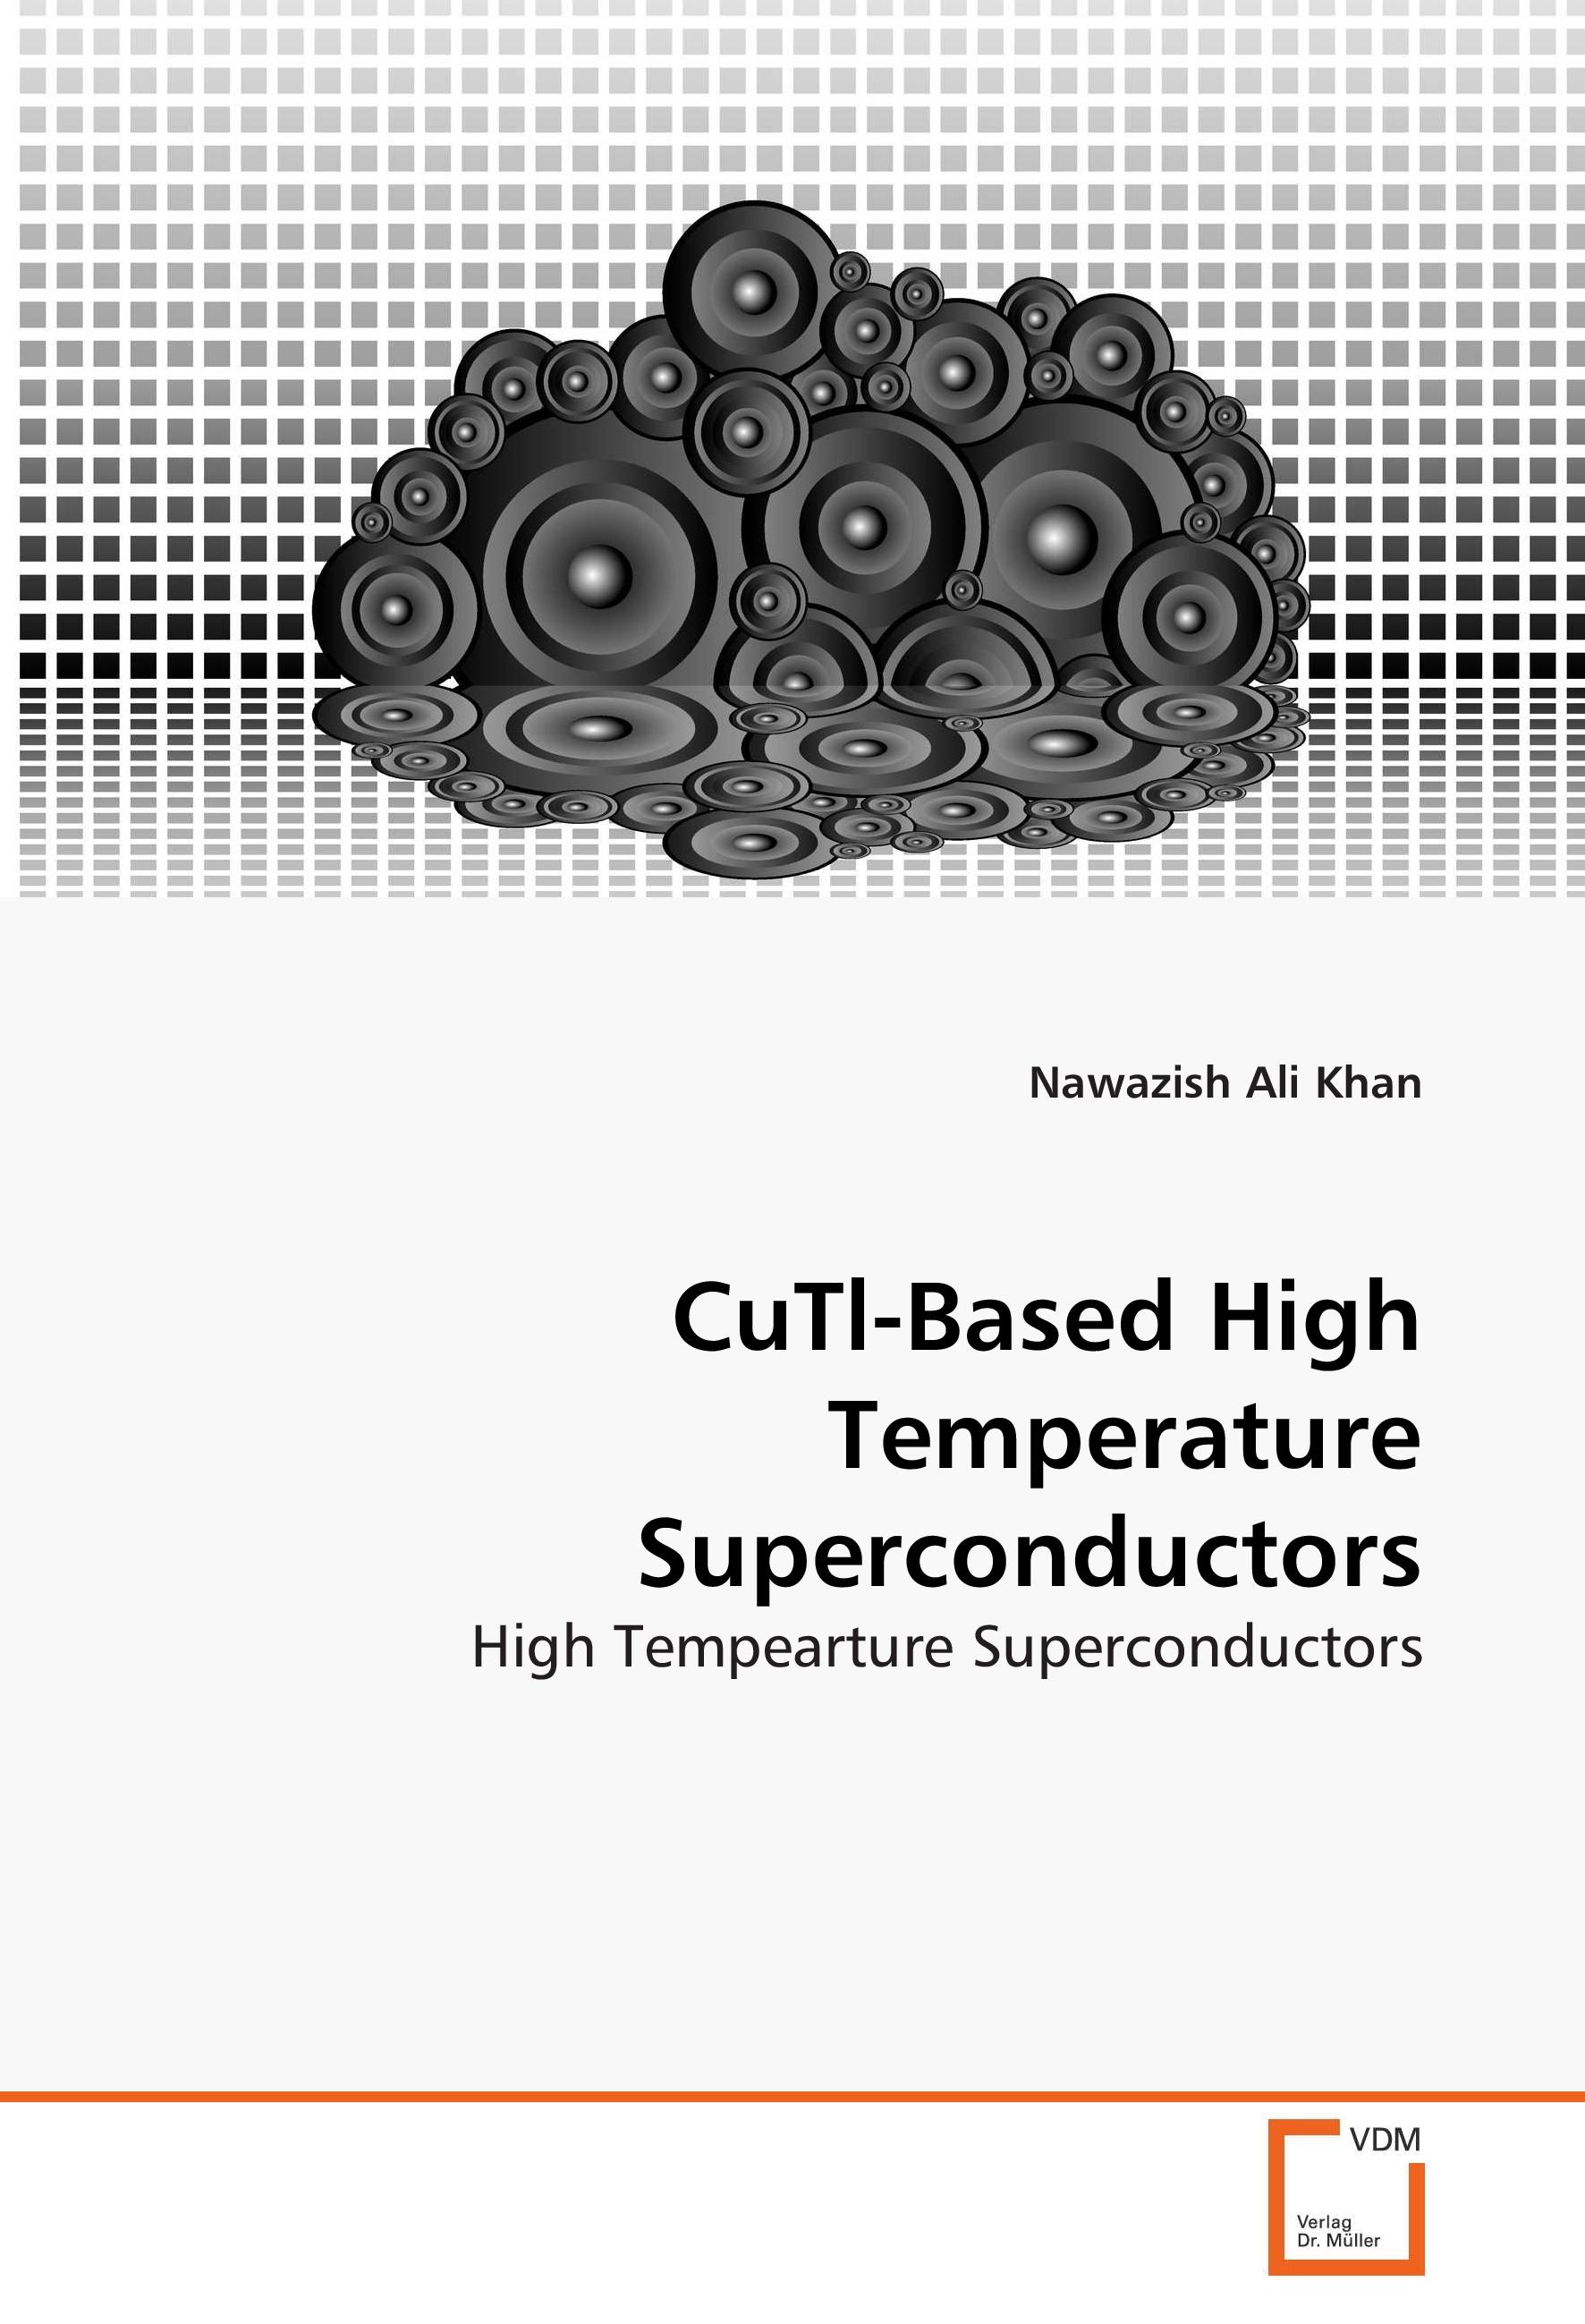 CuTl-Based High Temperature Superconductors | High Tempearture Superconductors | Nawazish Ali Khan | Taschenbuch | Paperback | 328 S. | Englisch | 2013 | VDM Verlag Dr. Müller e.K. | EAN 9783639268447 - Khan, Nawazish Ali